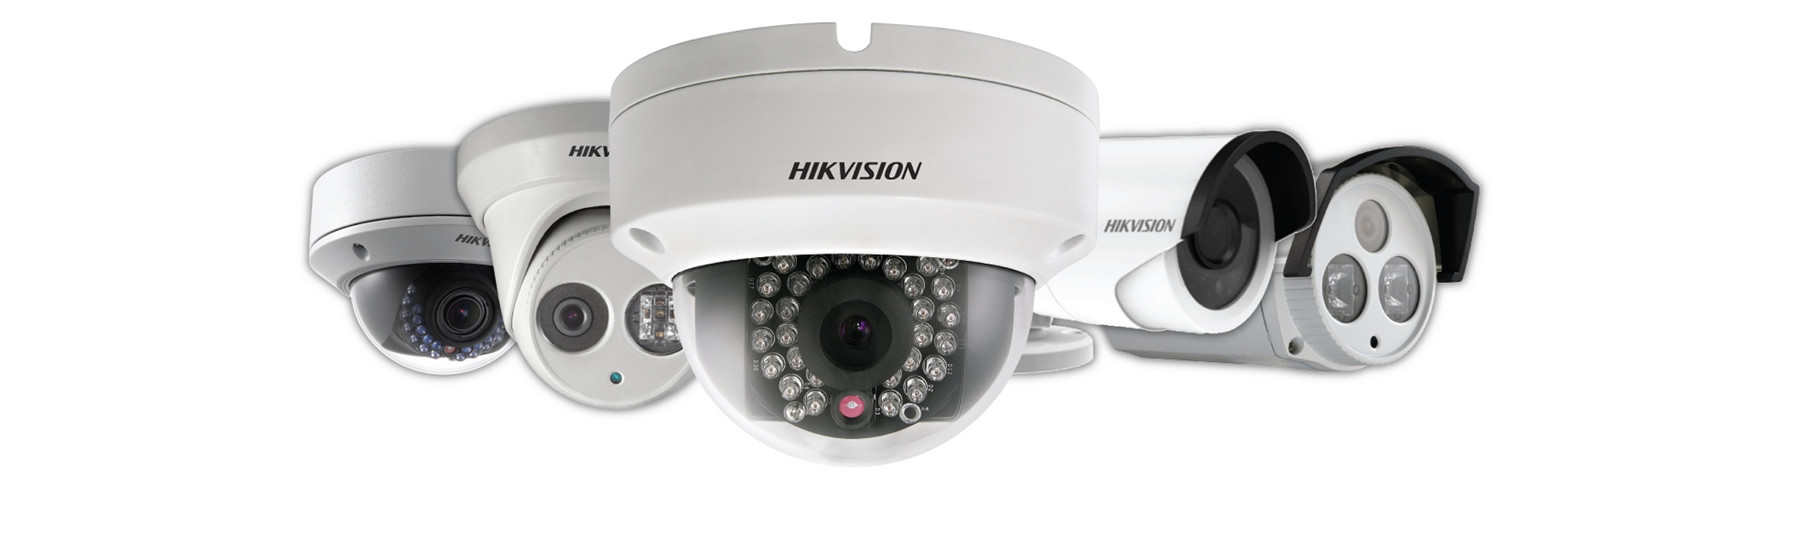 Edmonton Area Security Surveillance cameras IP security camera